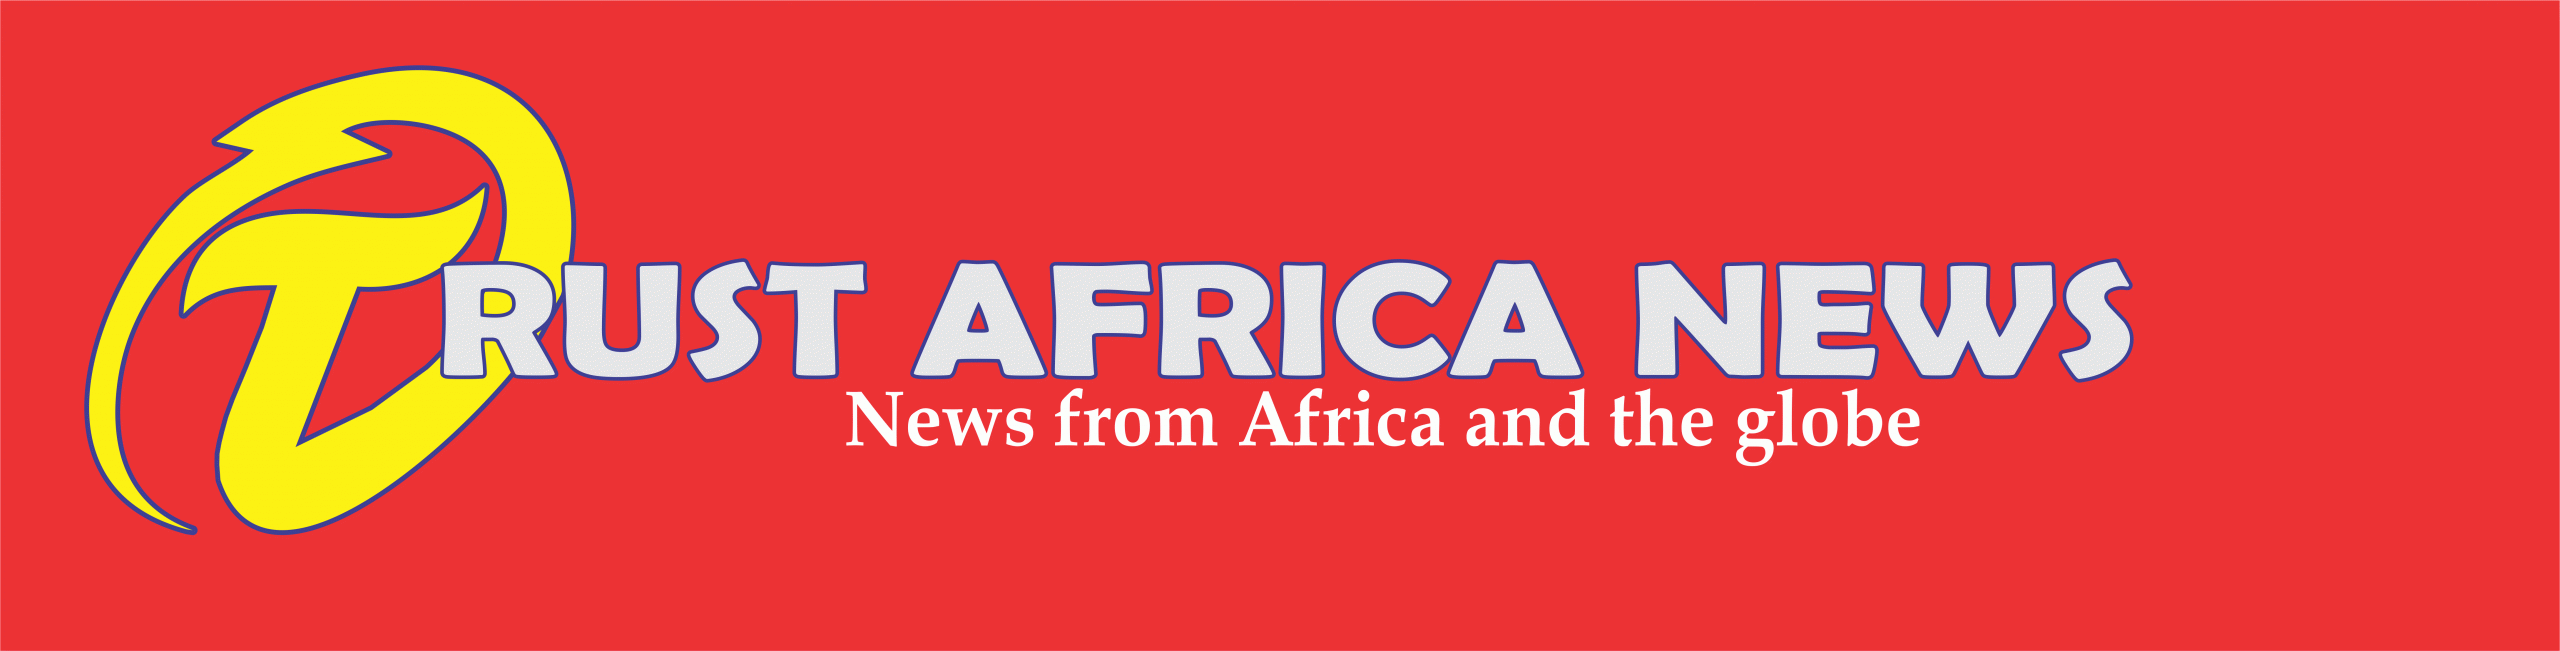 Trust Africa News